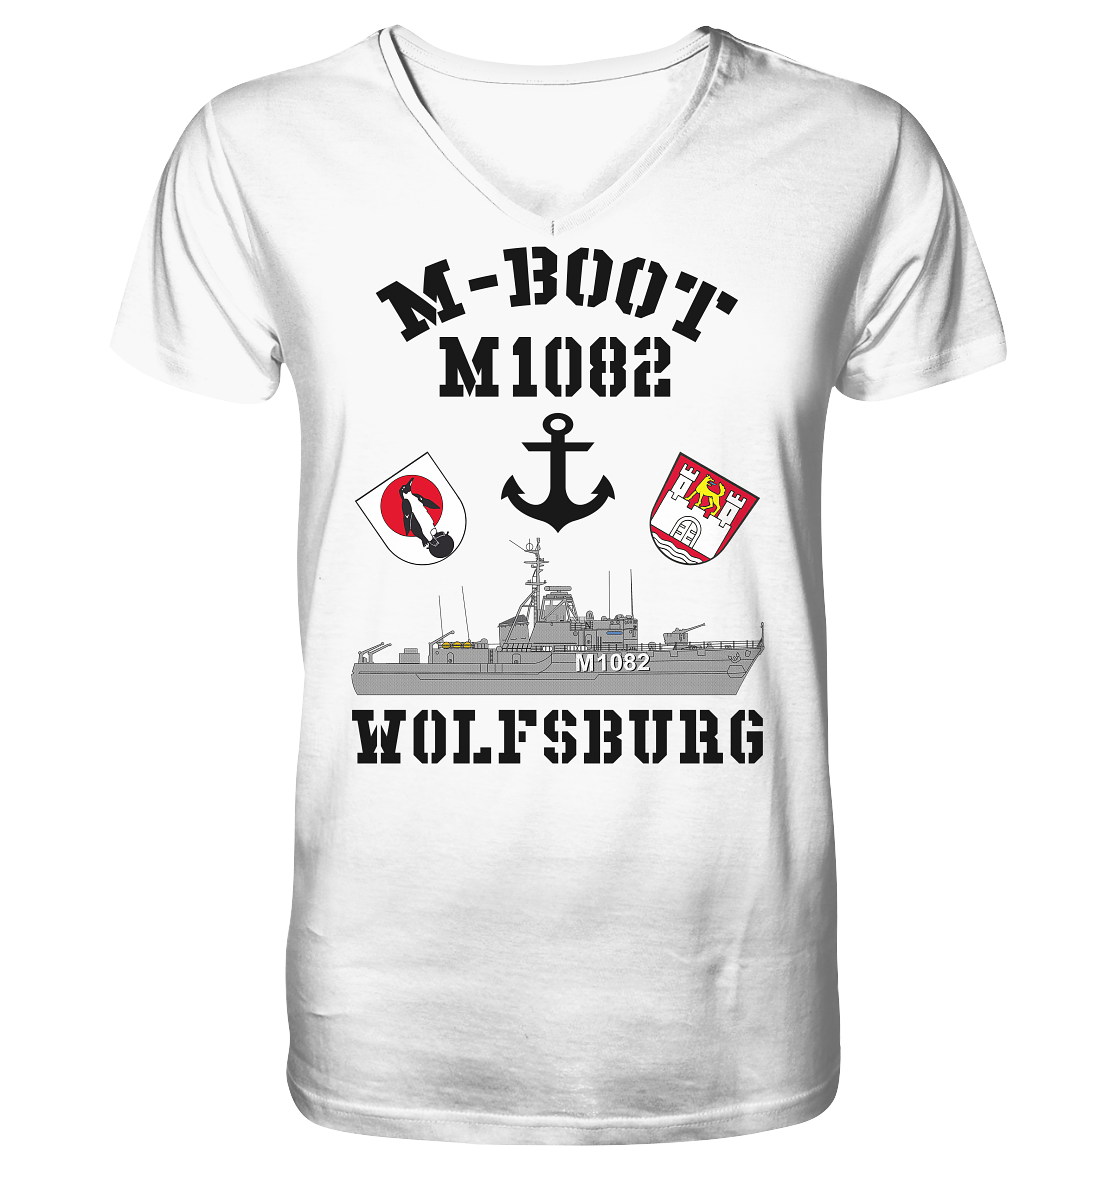 M-Boot M1082 WOLFSBURG Anker (HL) - Mens Organic V-Neck Shirt